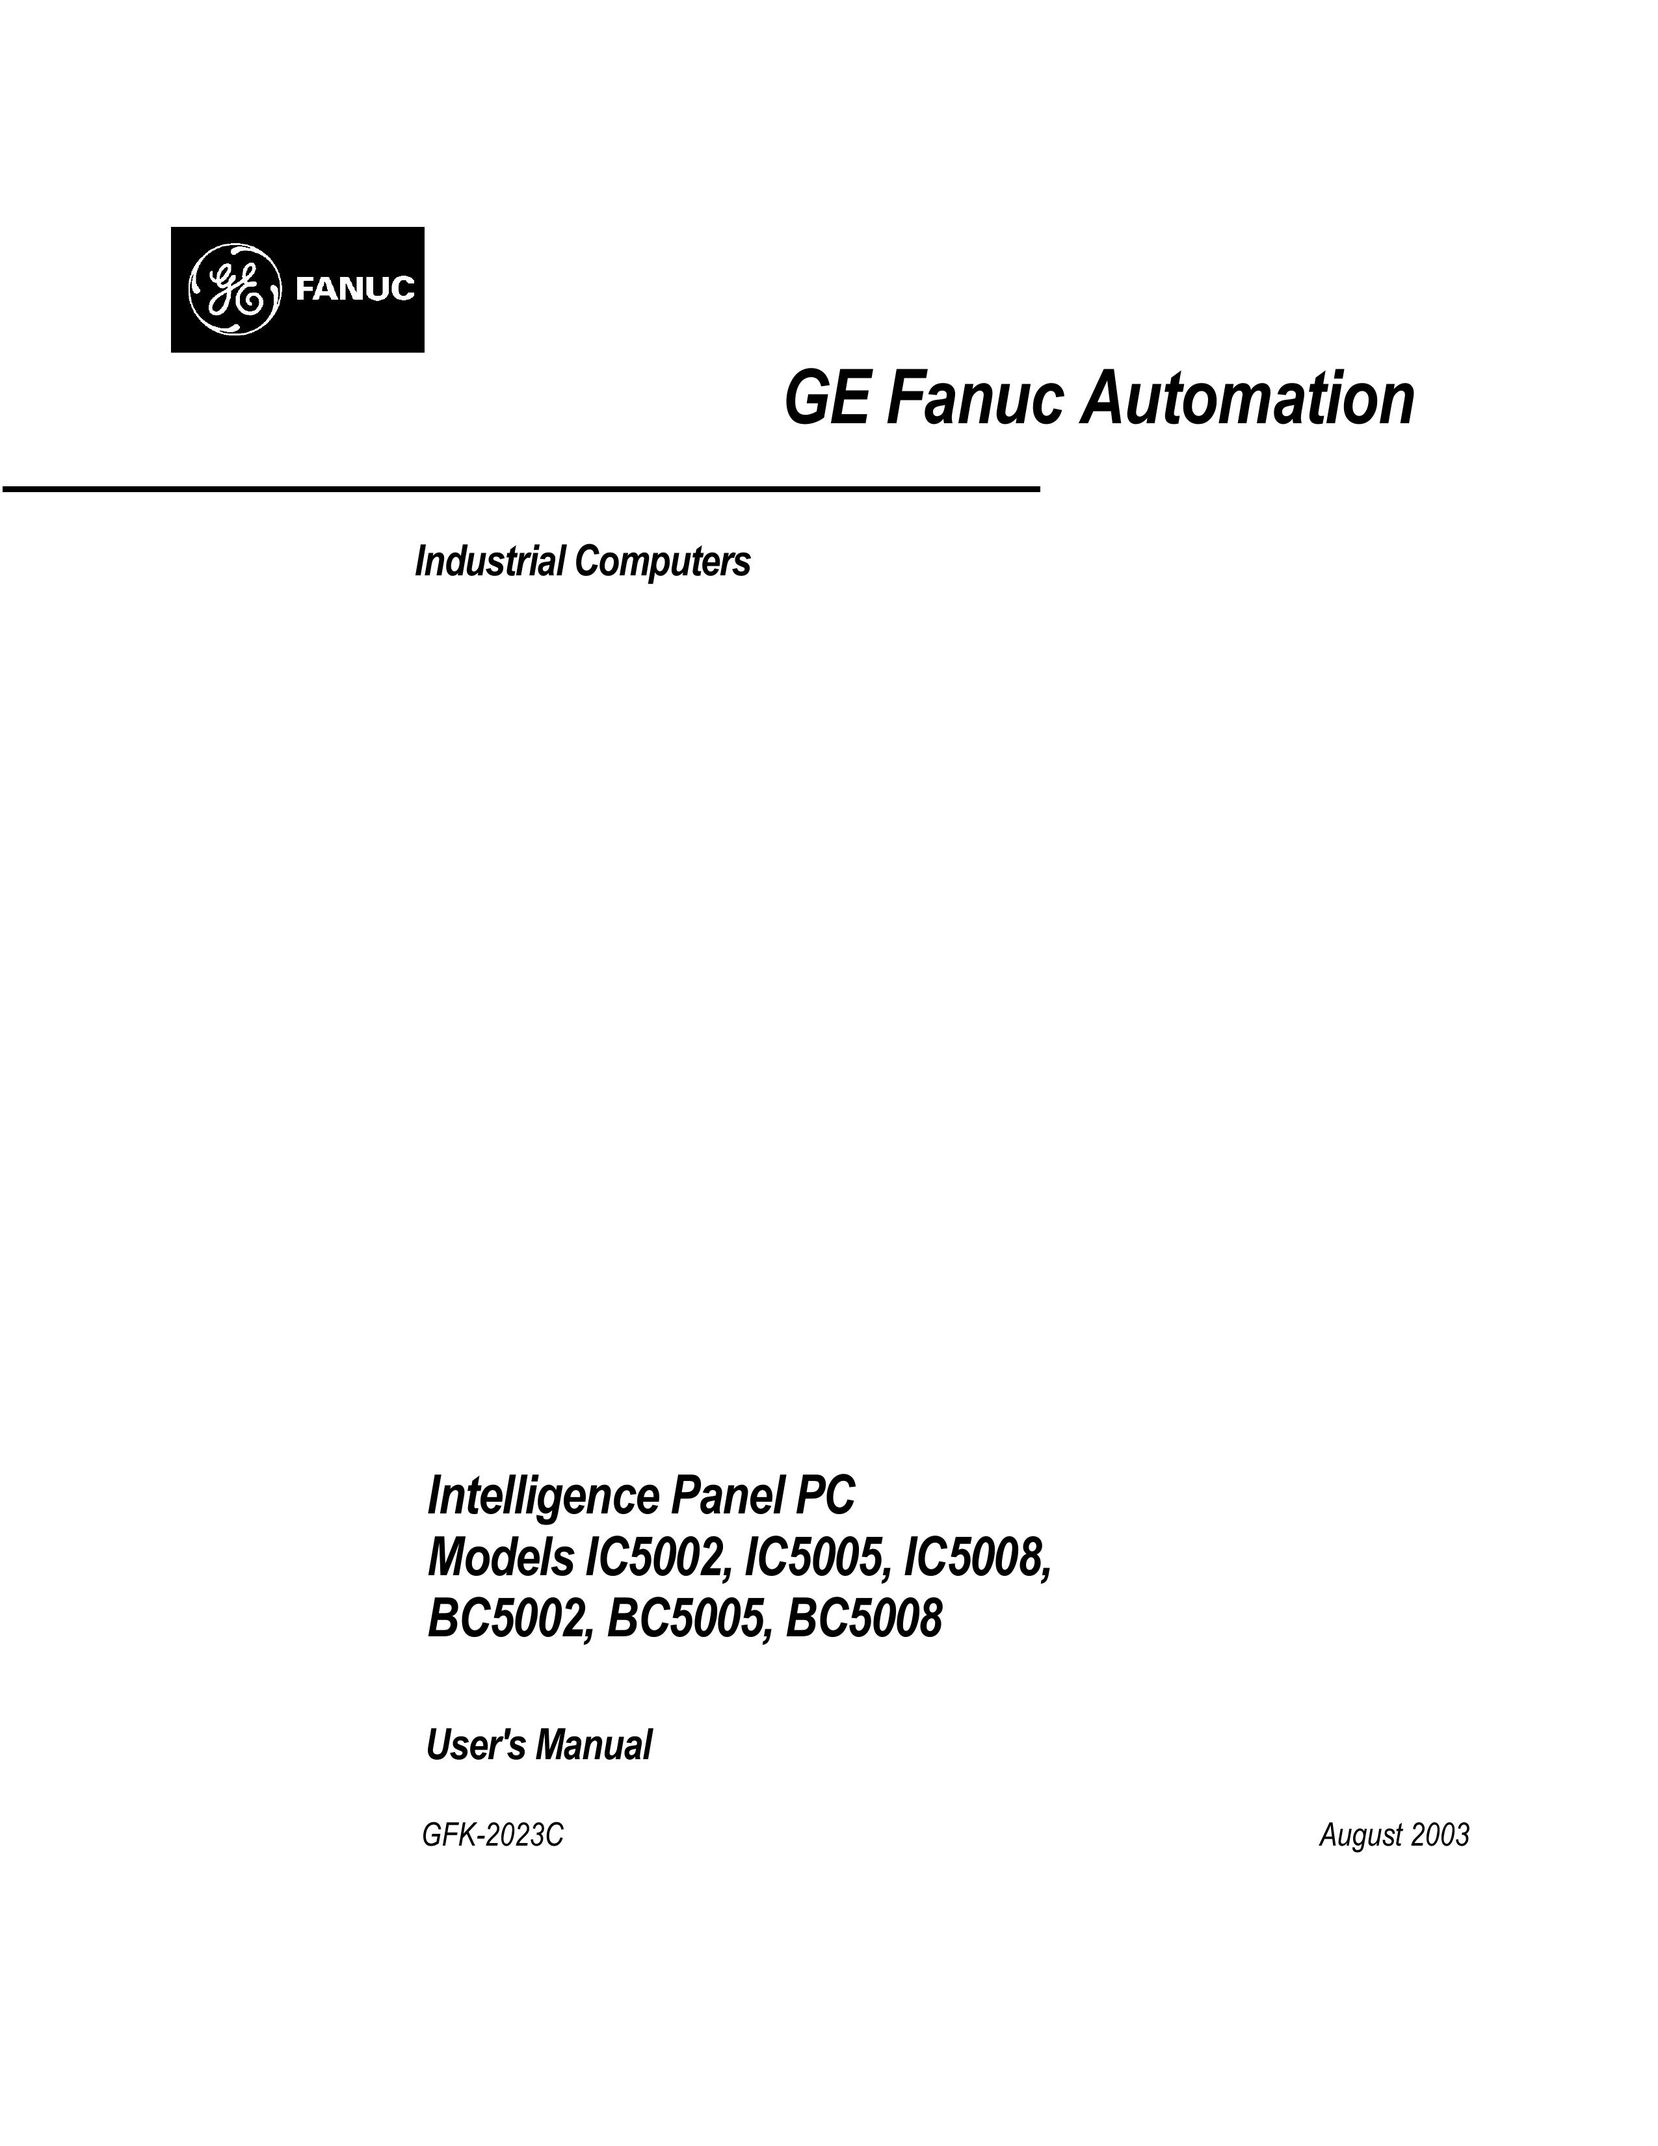 GE IC5008 Personal Computer User Manual